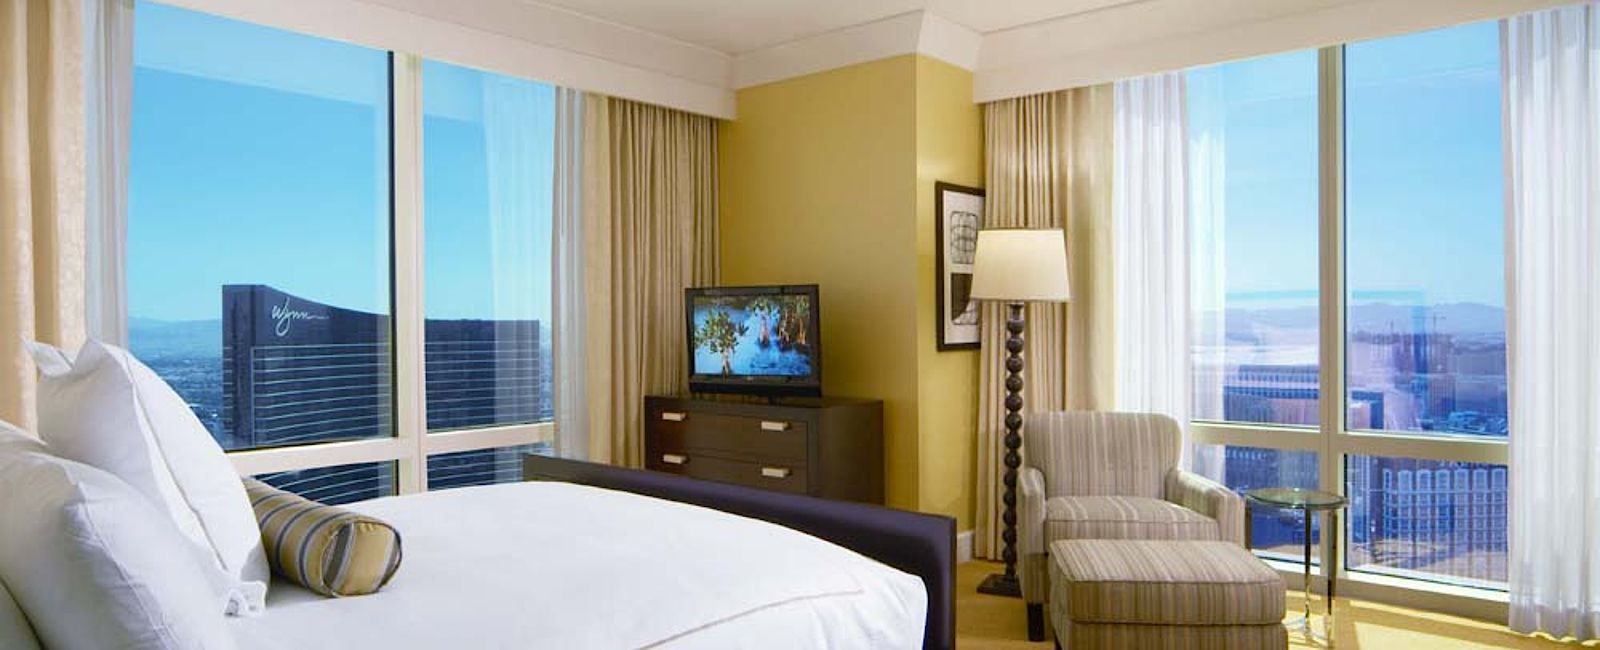 HOTELTEST
 Trump International Hotel Las Vegas 
 Entspannte Stadtoase 